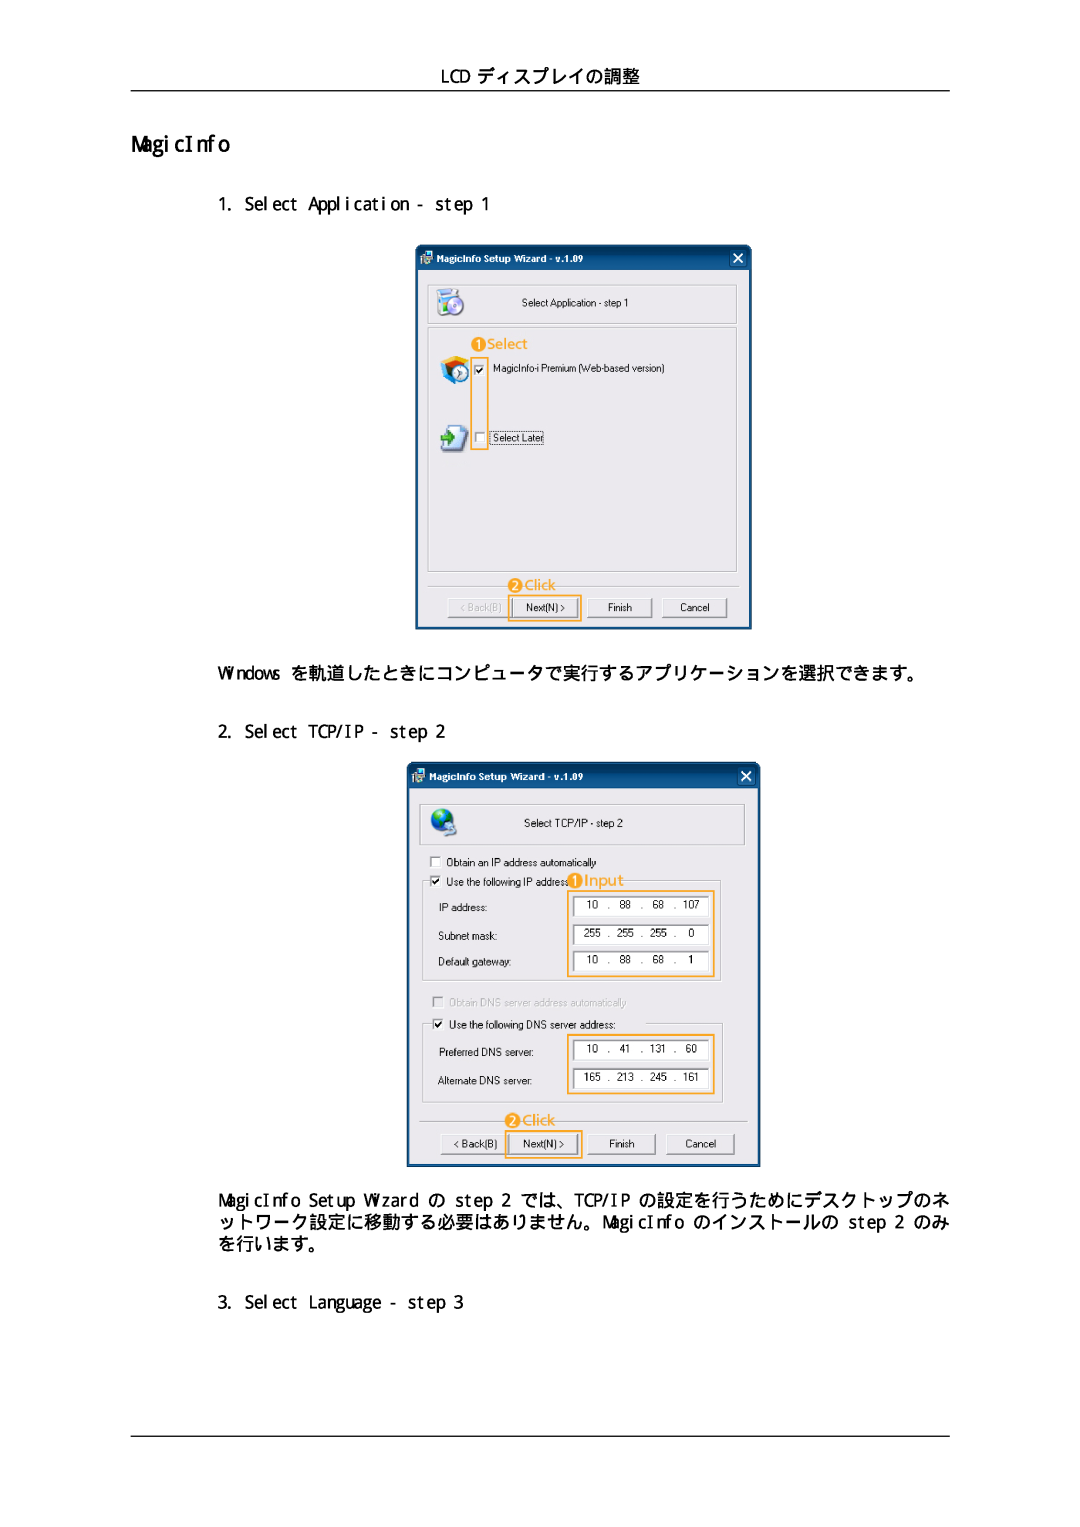 Samsung LH46CKUJBB/XJ, LH46CBULBB/XJ Select Application - step, Select TCP/IP - step, Select Language - step, MagicInfo 